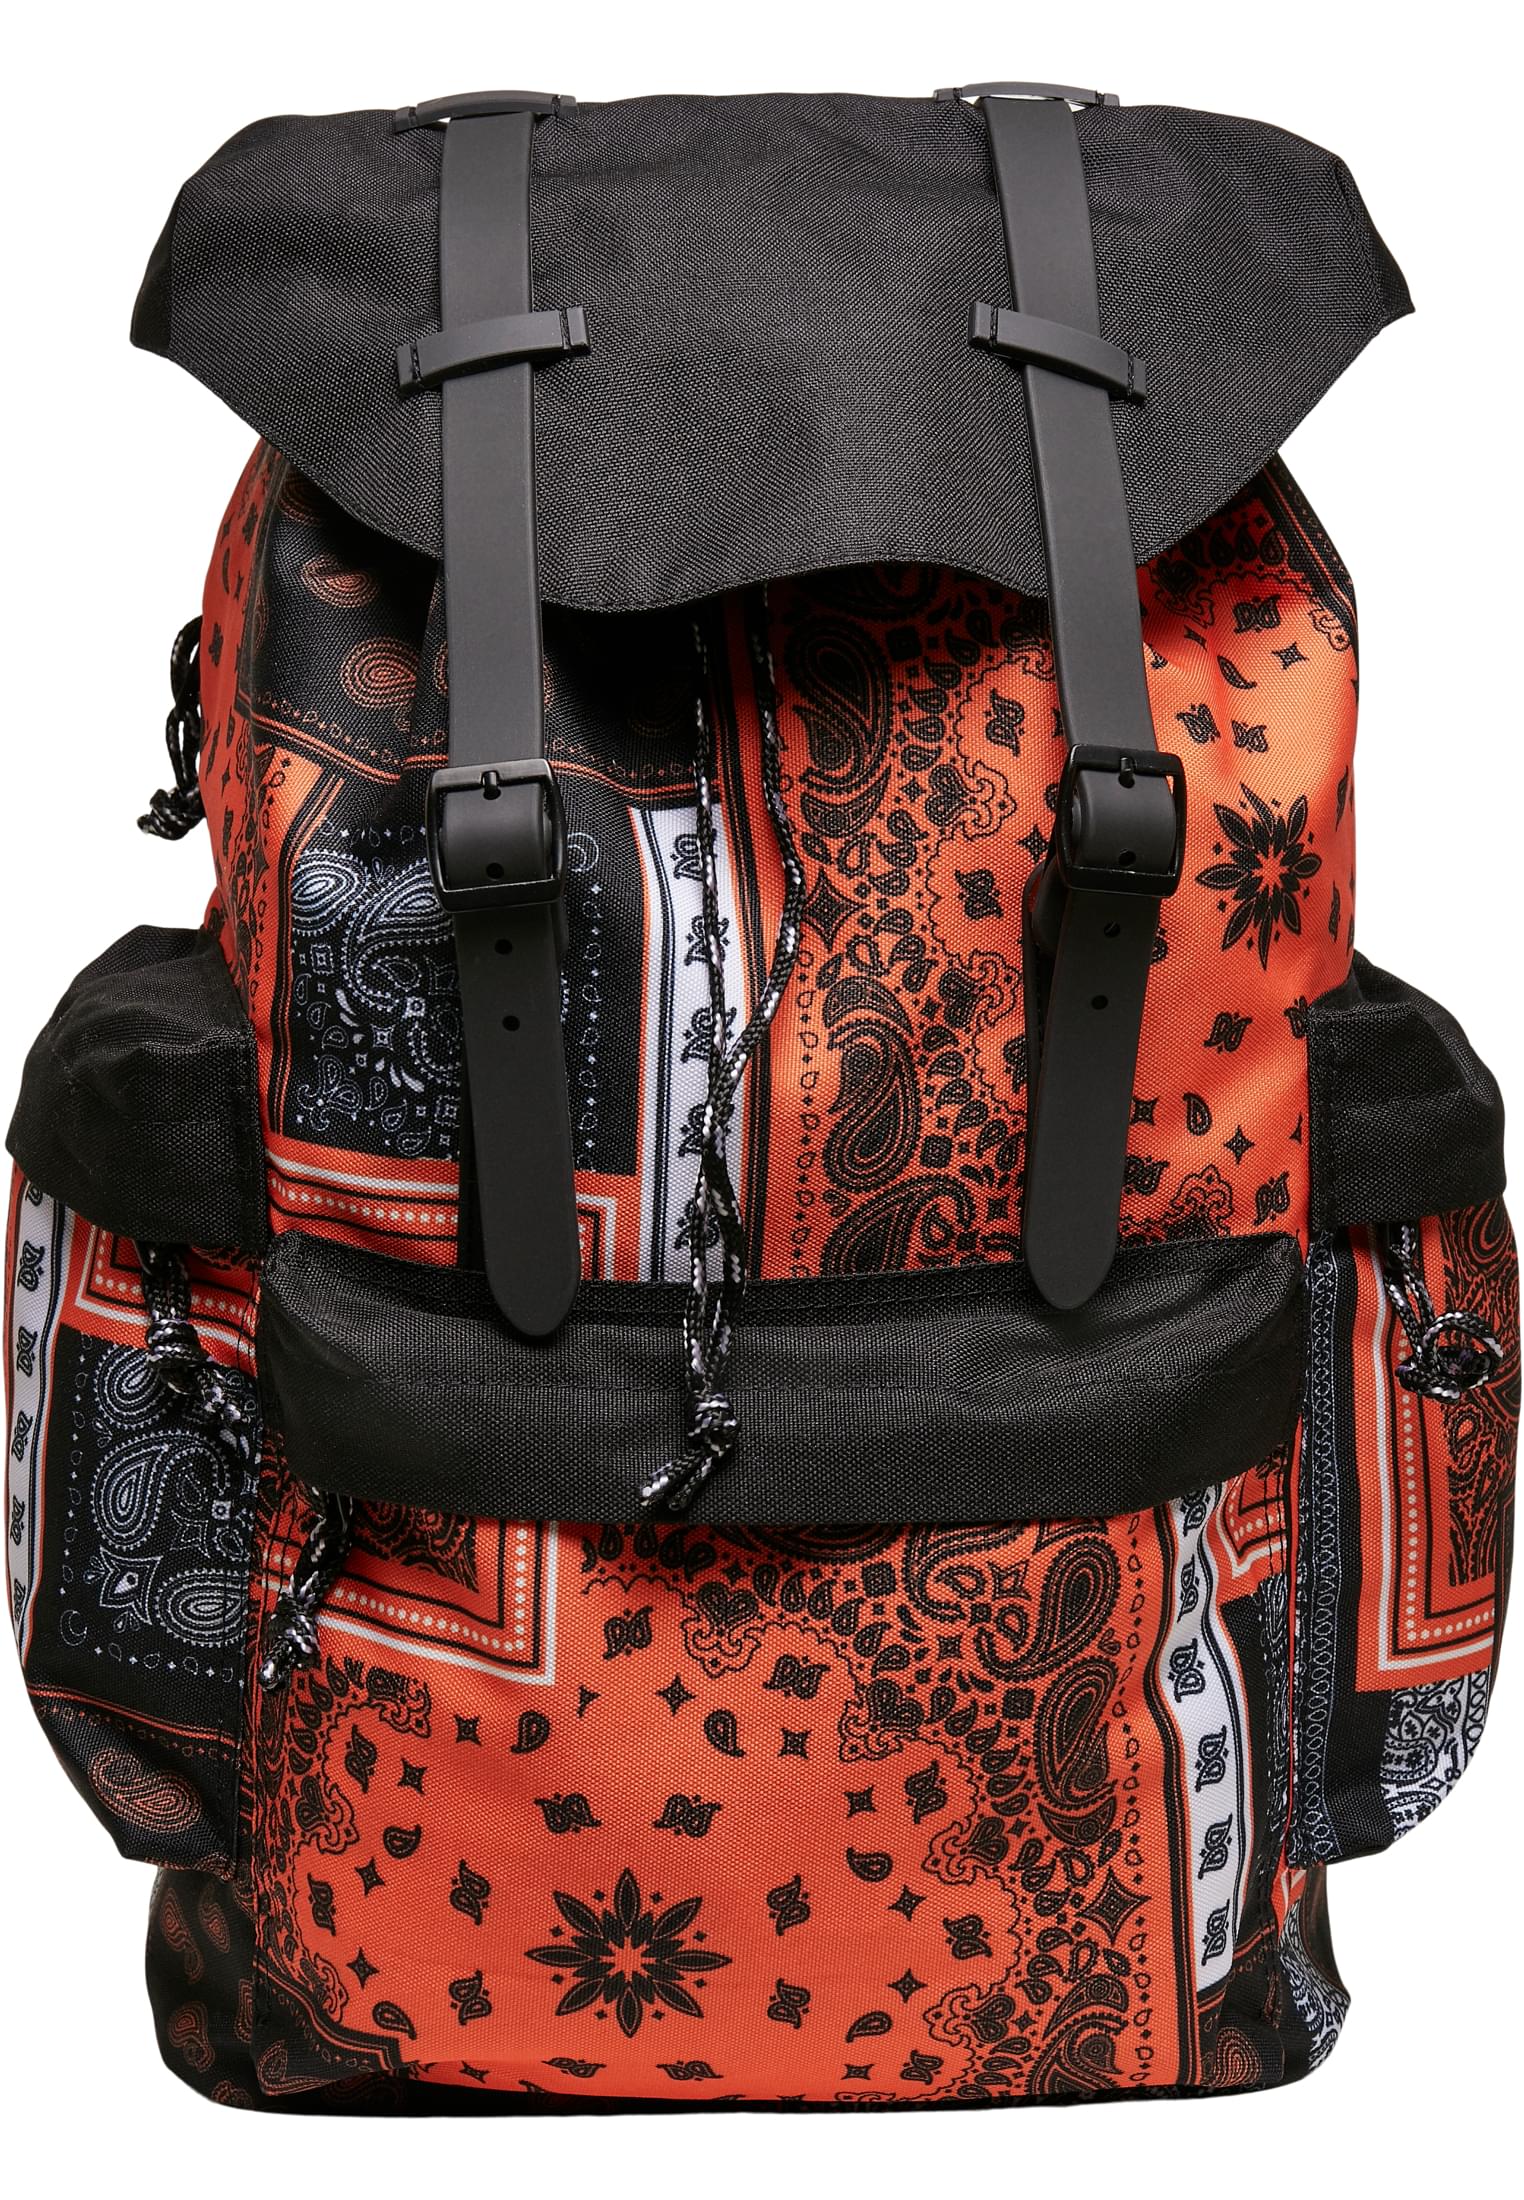 Bandana Patchwork Print Backpack Black/Orange